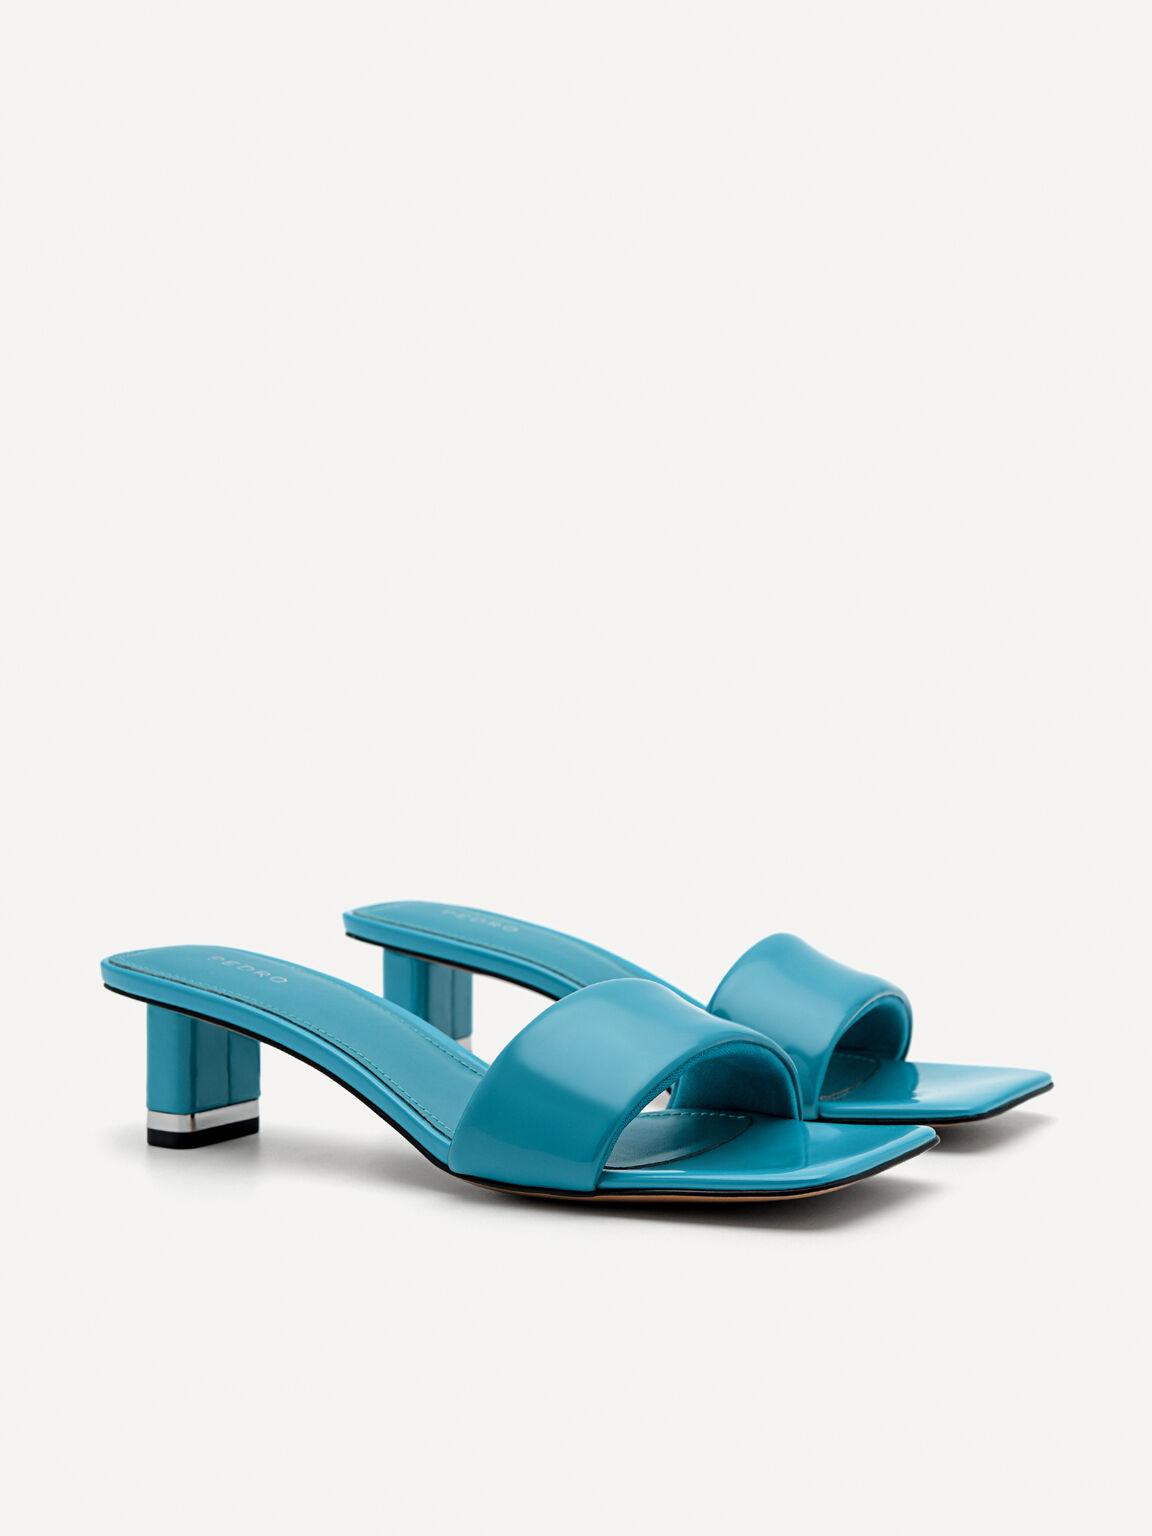 Porto Heel Sandals, Turquoise, hi-res